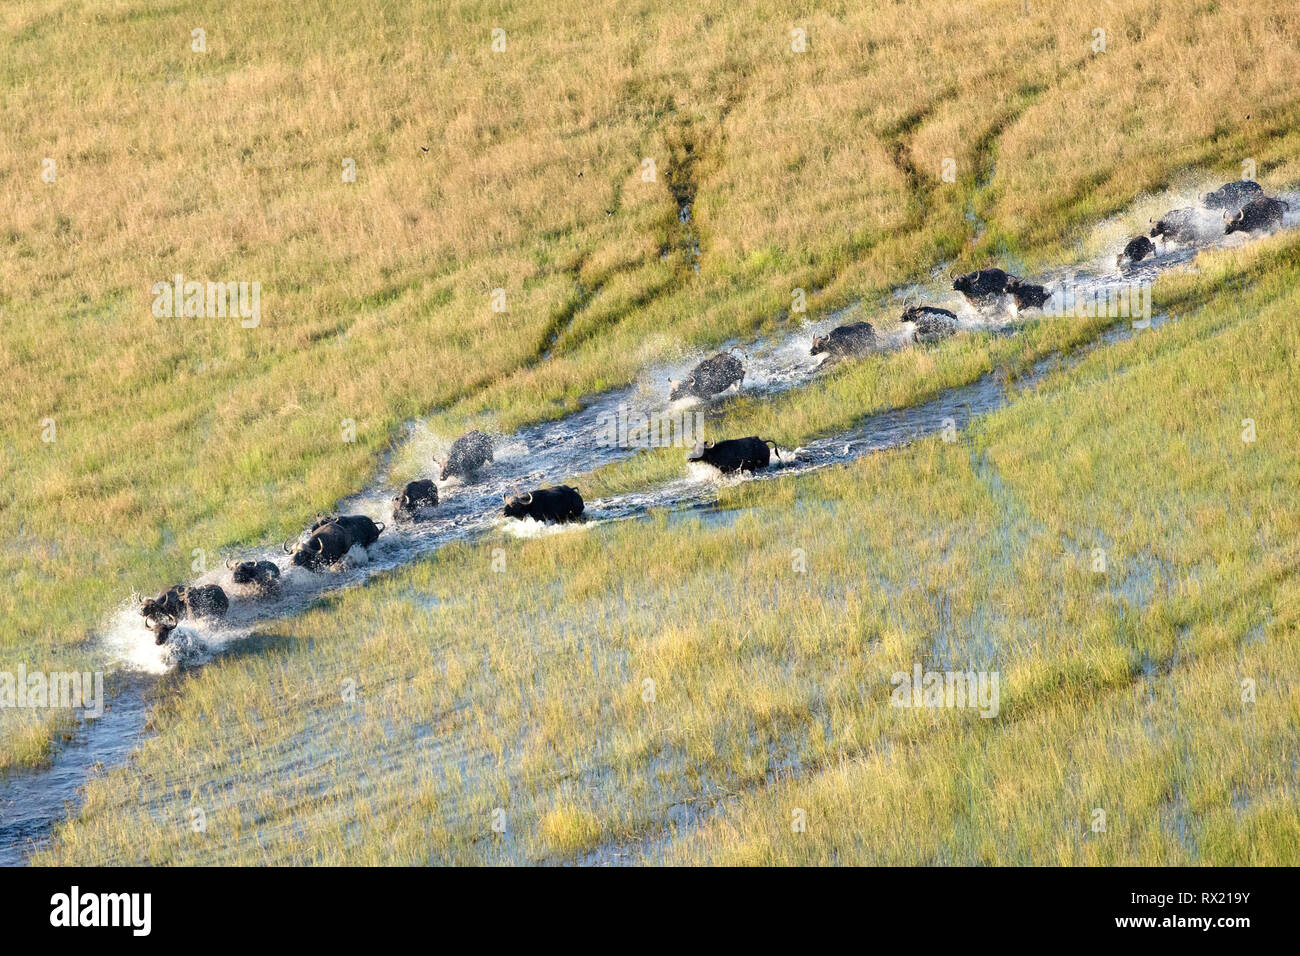 A herd of buffalo running through the water of the Okavango Delta Stock Photo